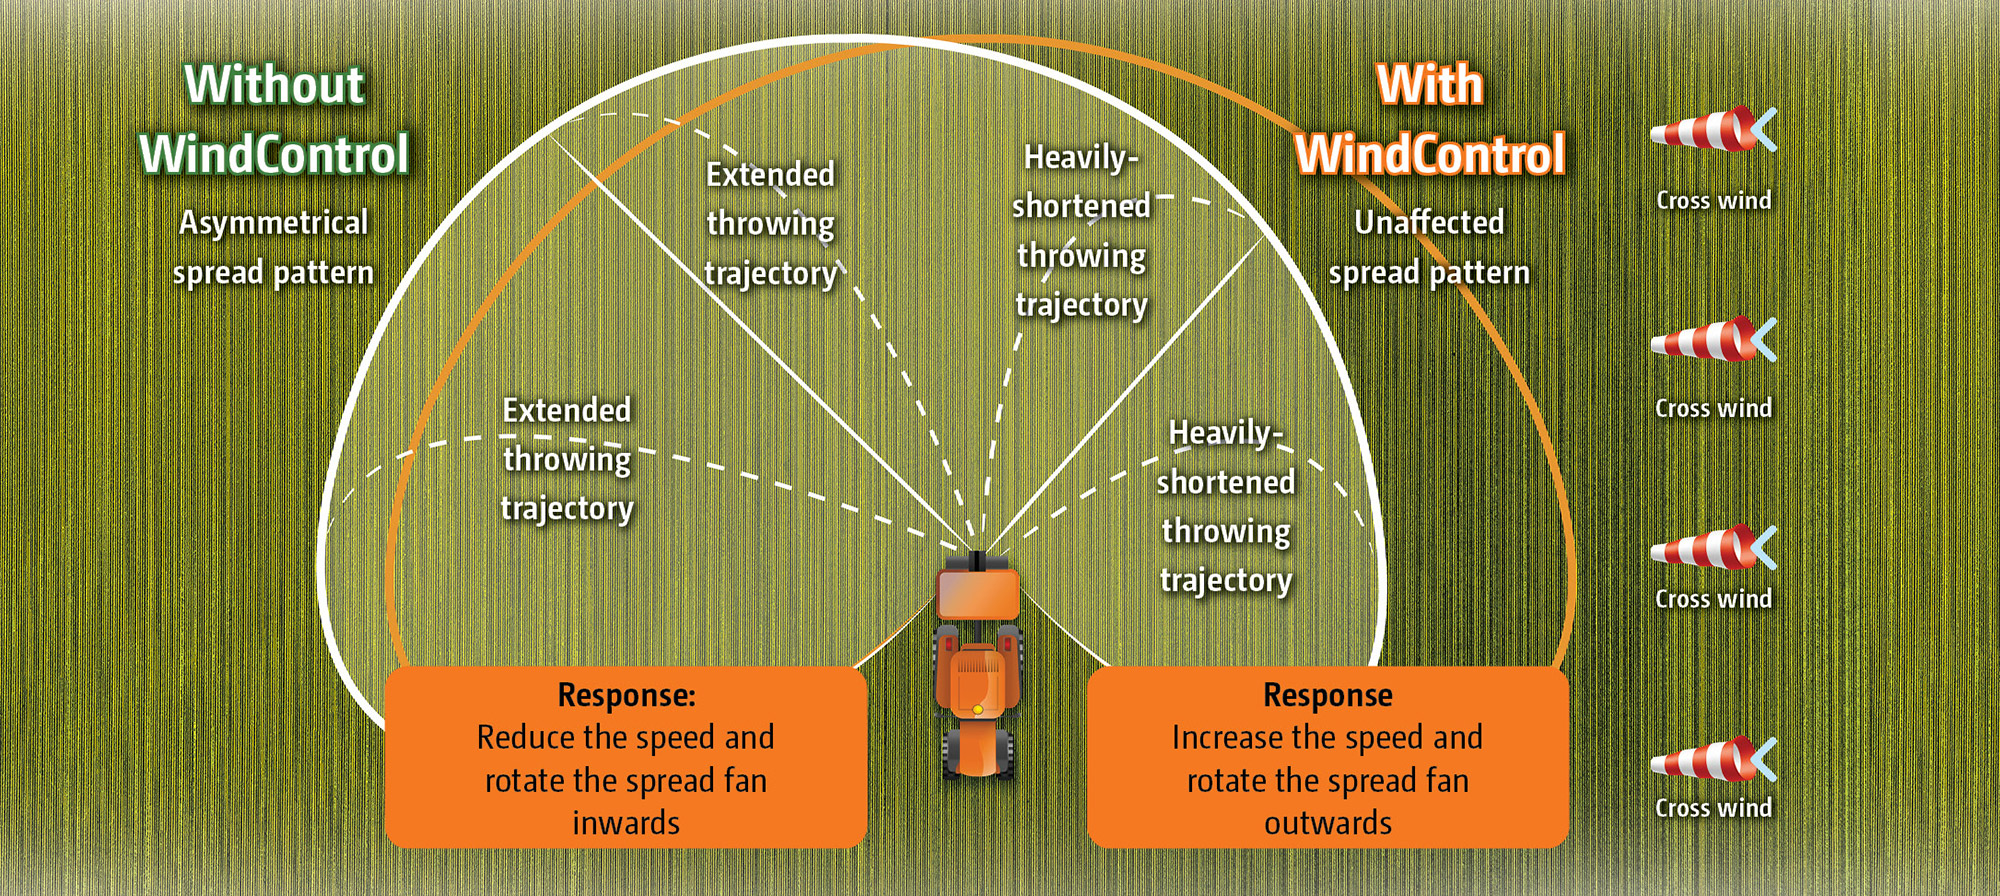 schematic-representation-of-windcontrol